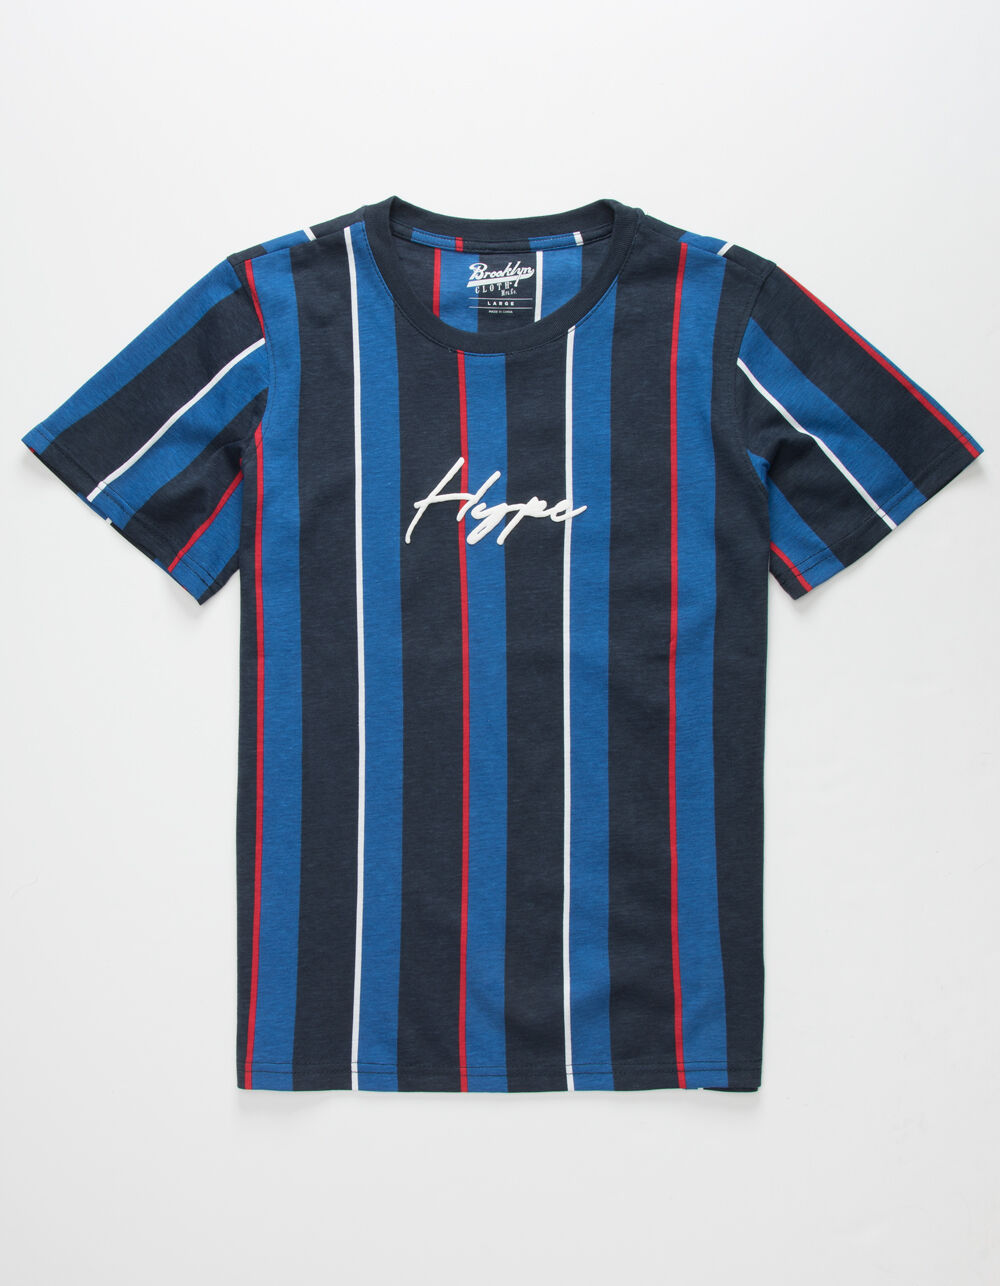 BROOKLYN CLOTH Hype Stripe Boys T-Shirt - BLUE | Tillys